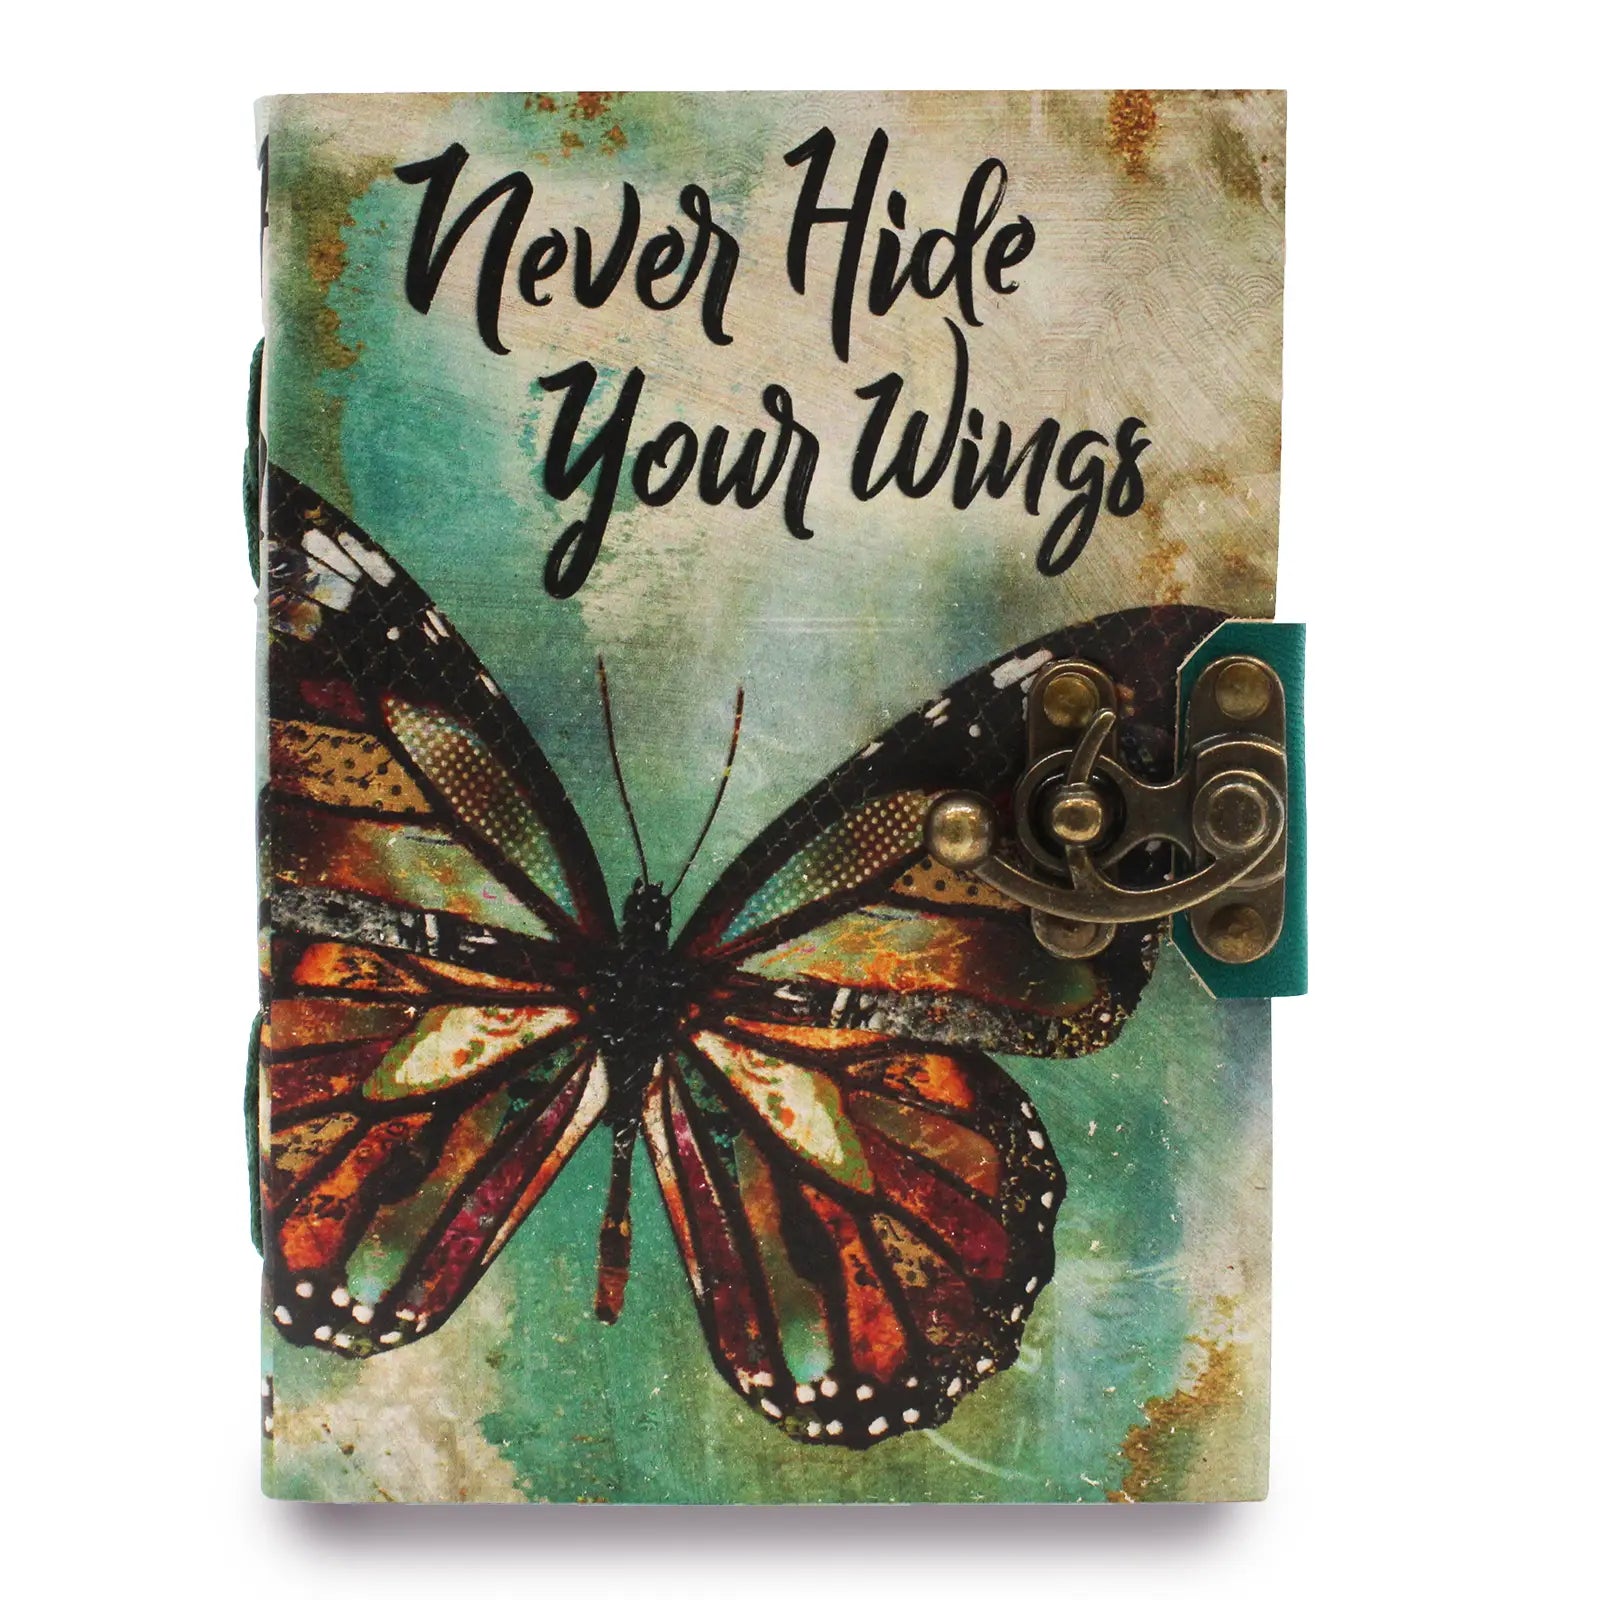 Never hide your wings journal ancient wisdom faire